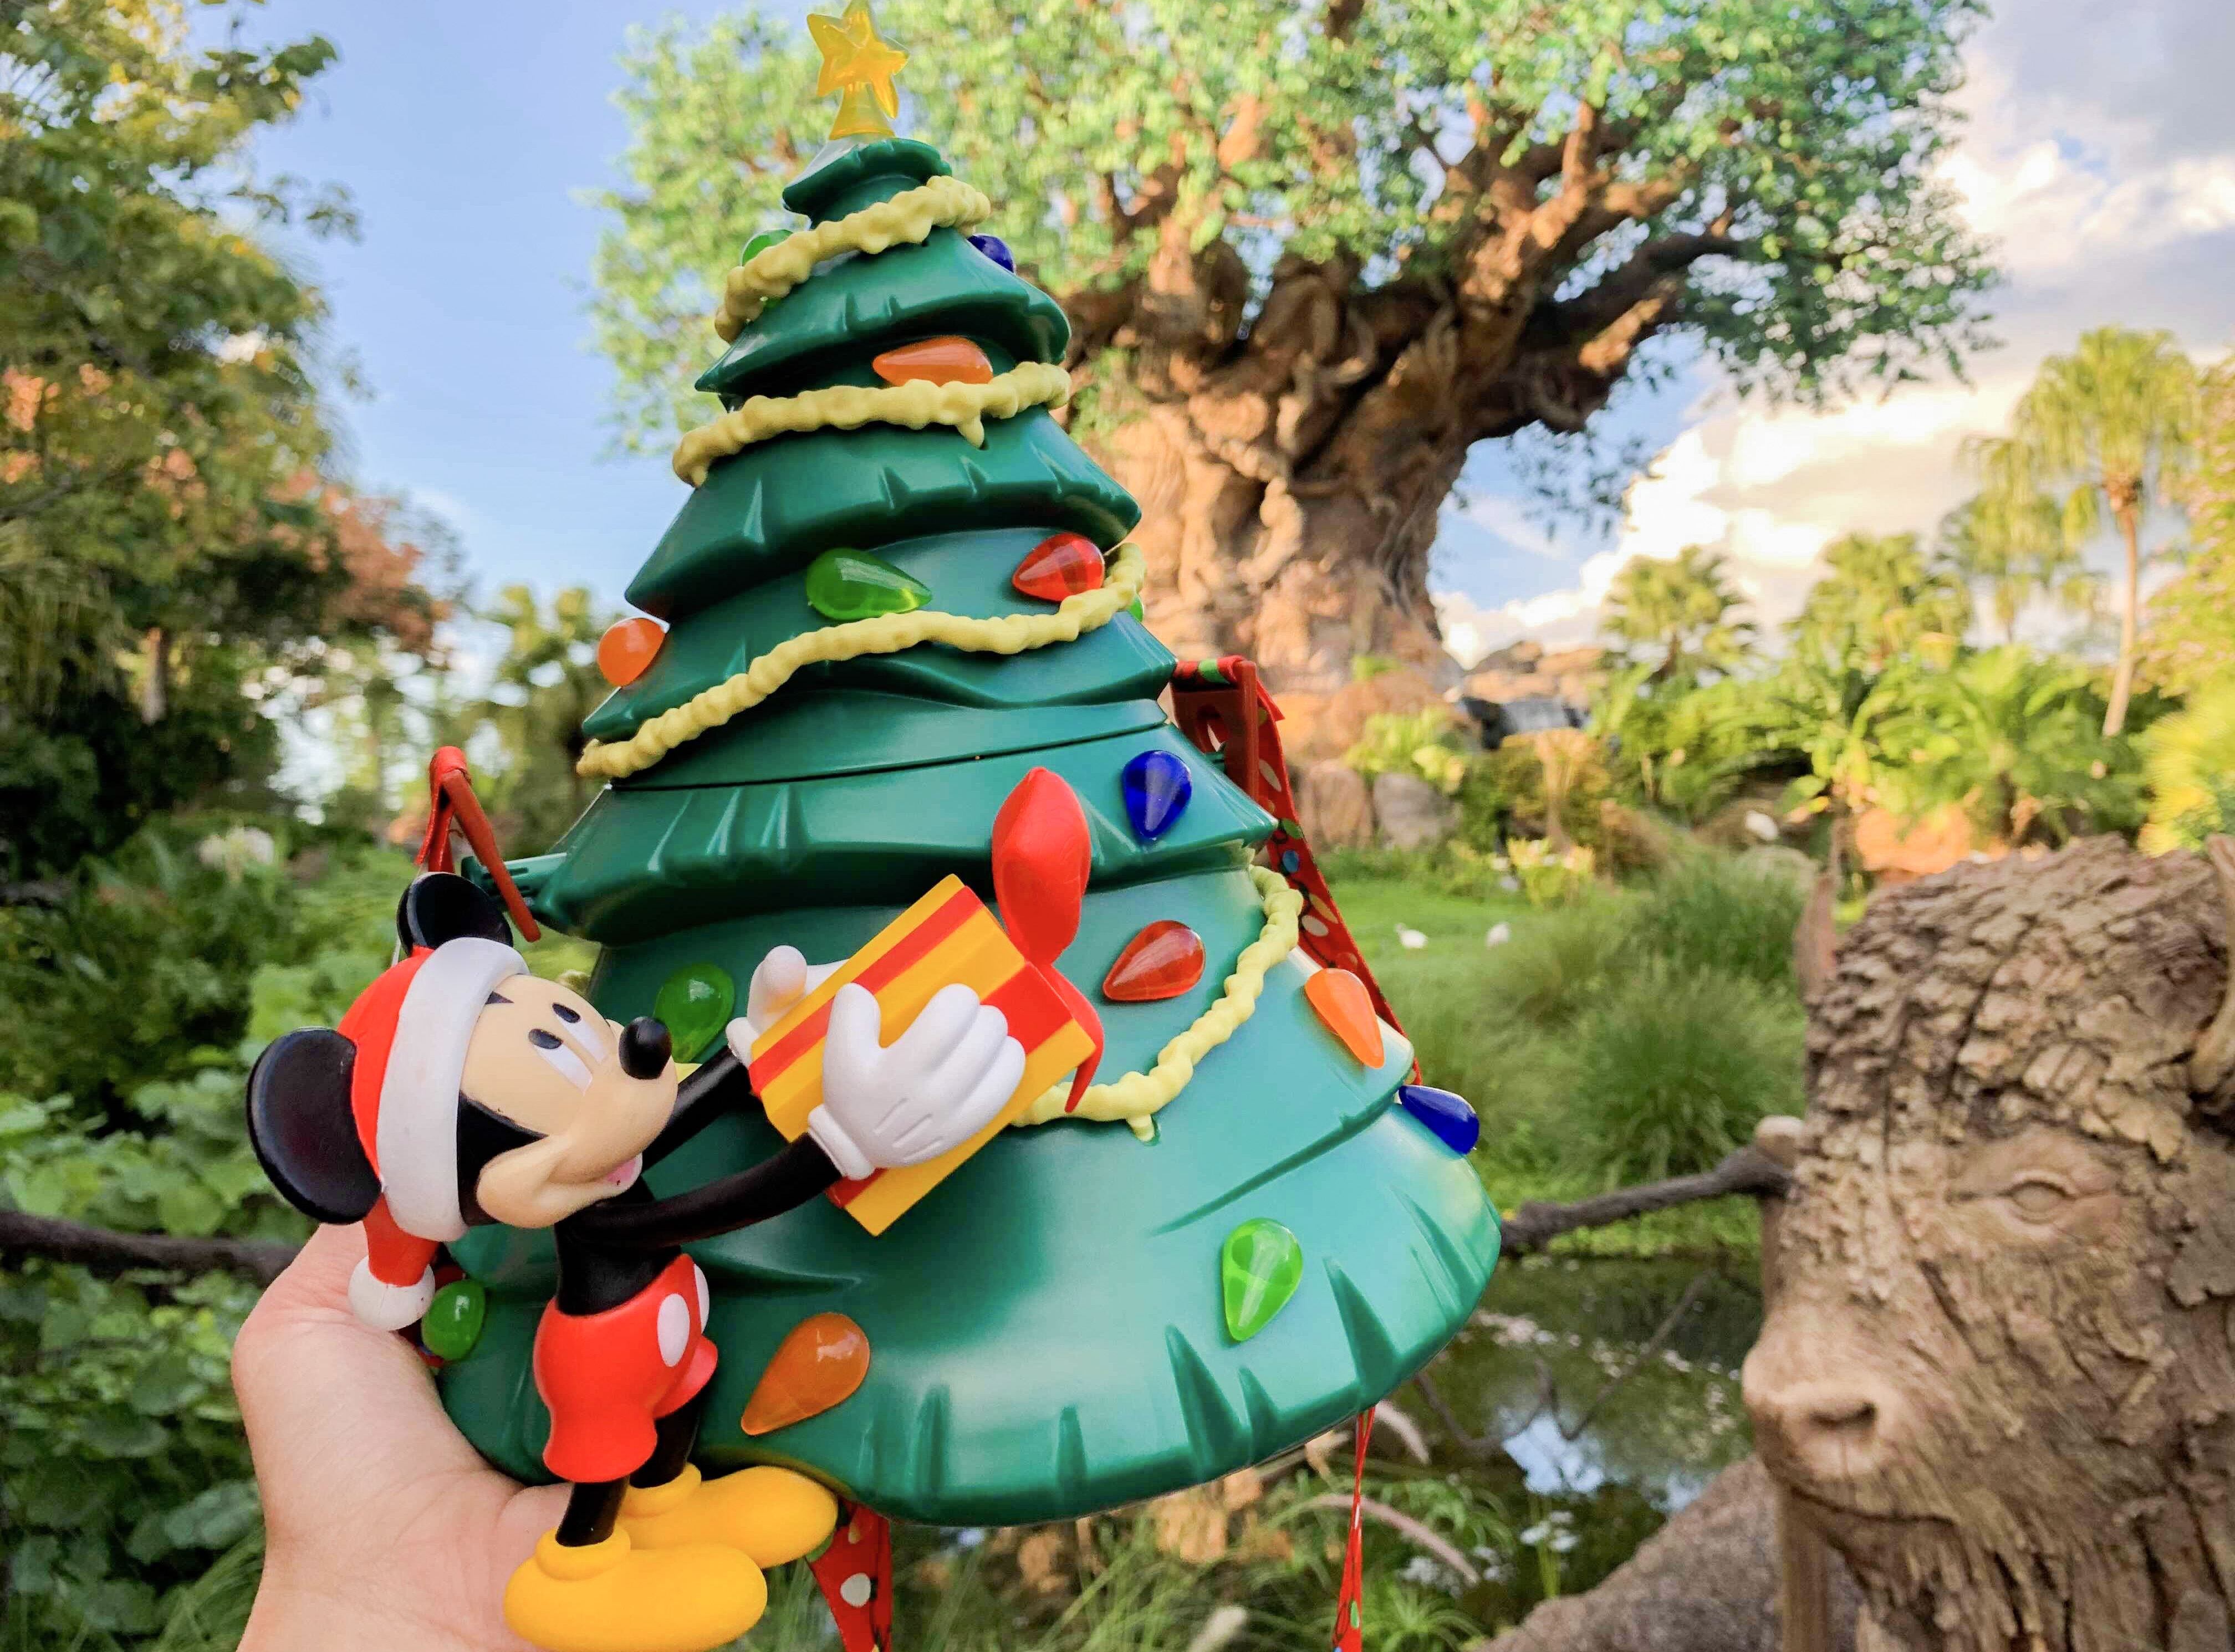 Mickey’s Christmas Tree Popcorn Bucket Shows Up at Animal Kingdom